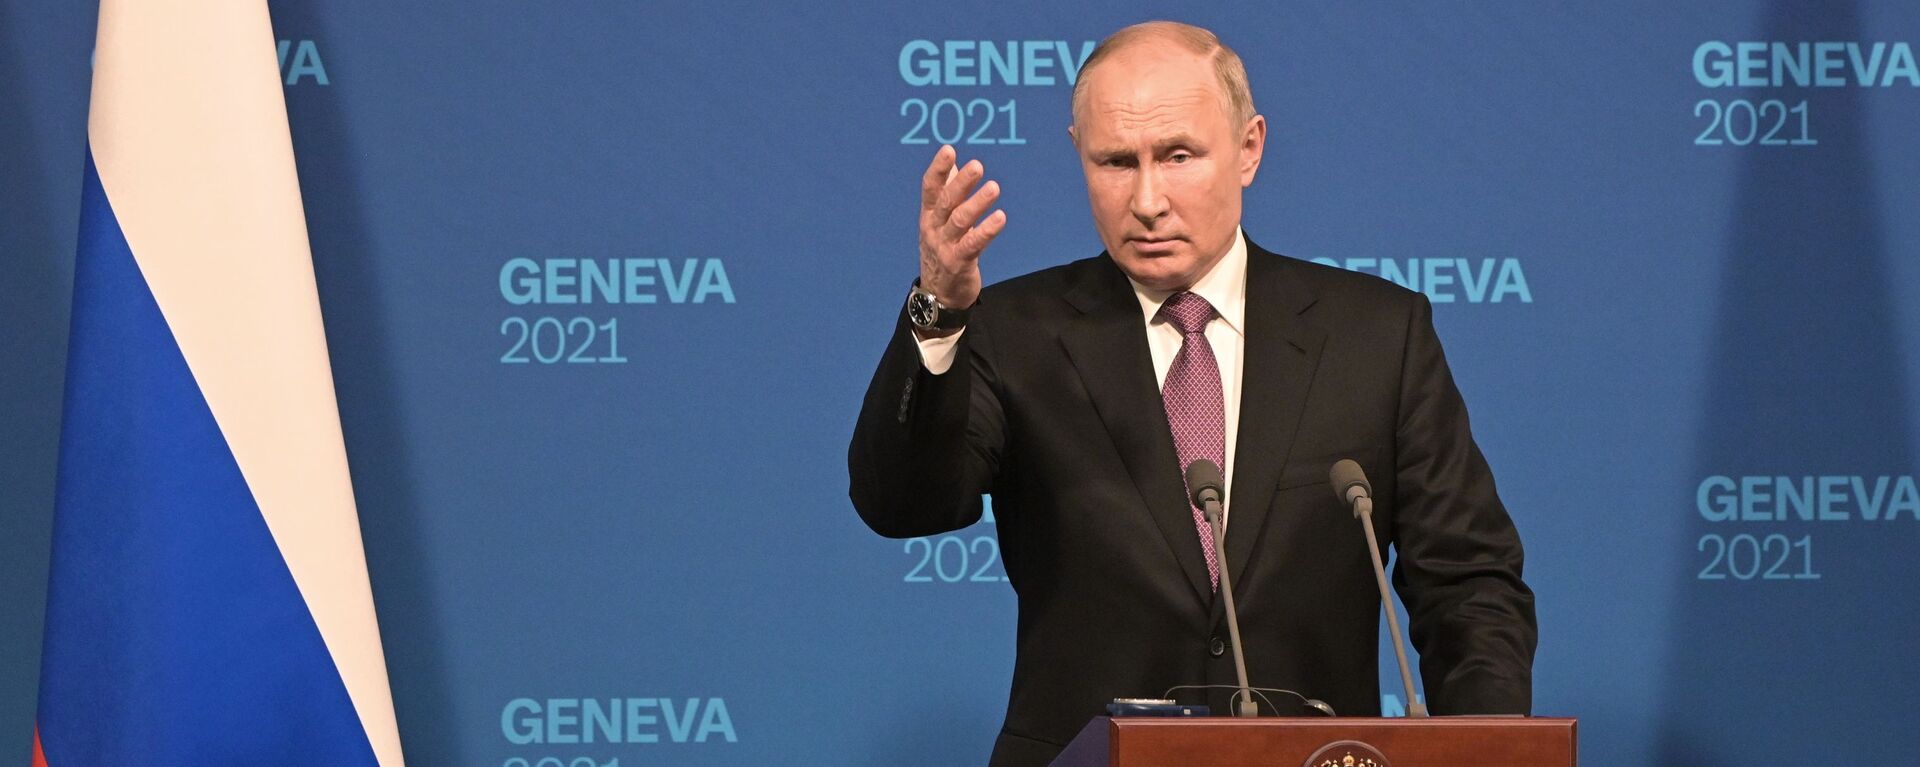 Президент РФ Владимир Путин на пресс-конференции - Sputnik Грузия, 1920, 16.06.2021